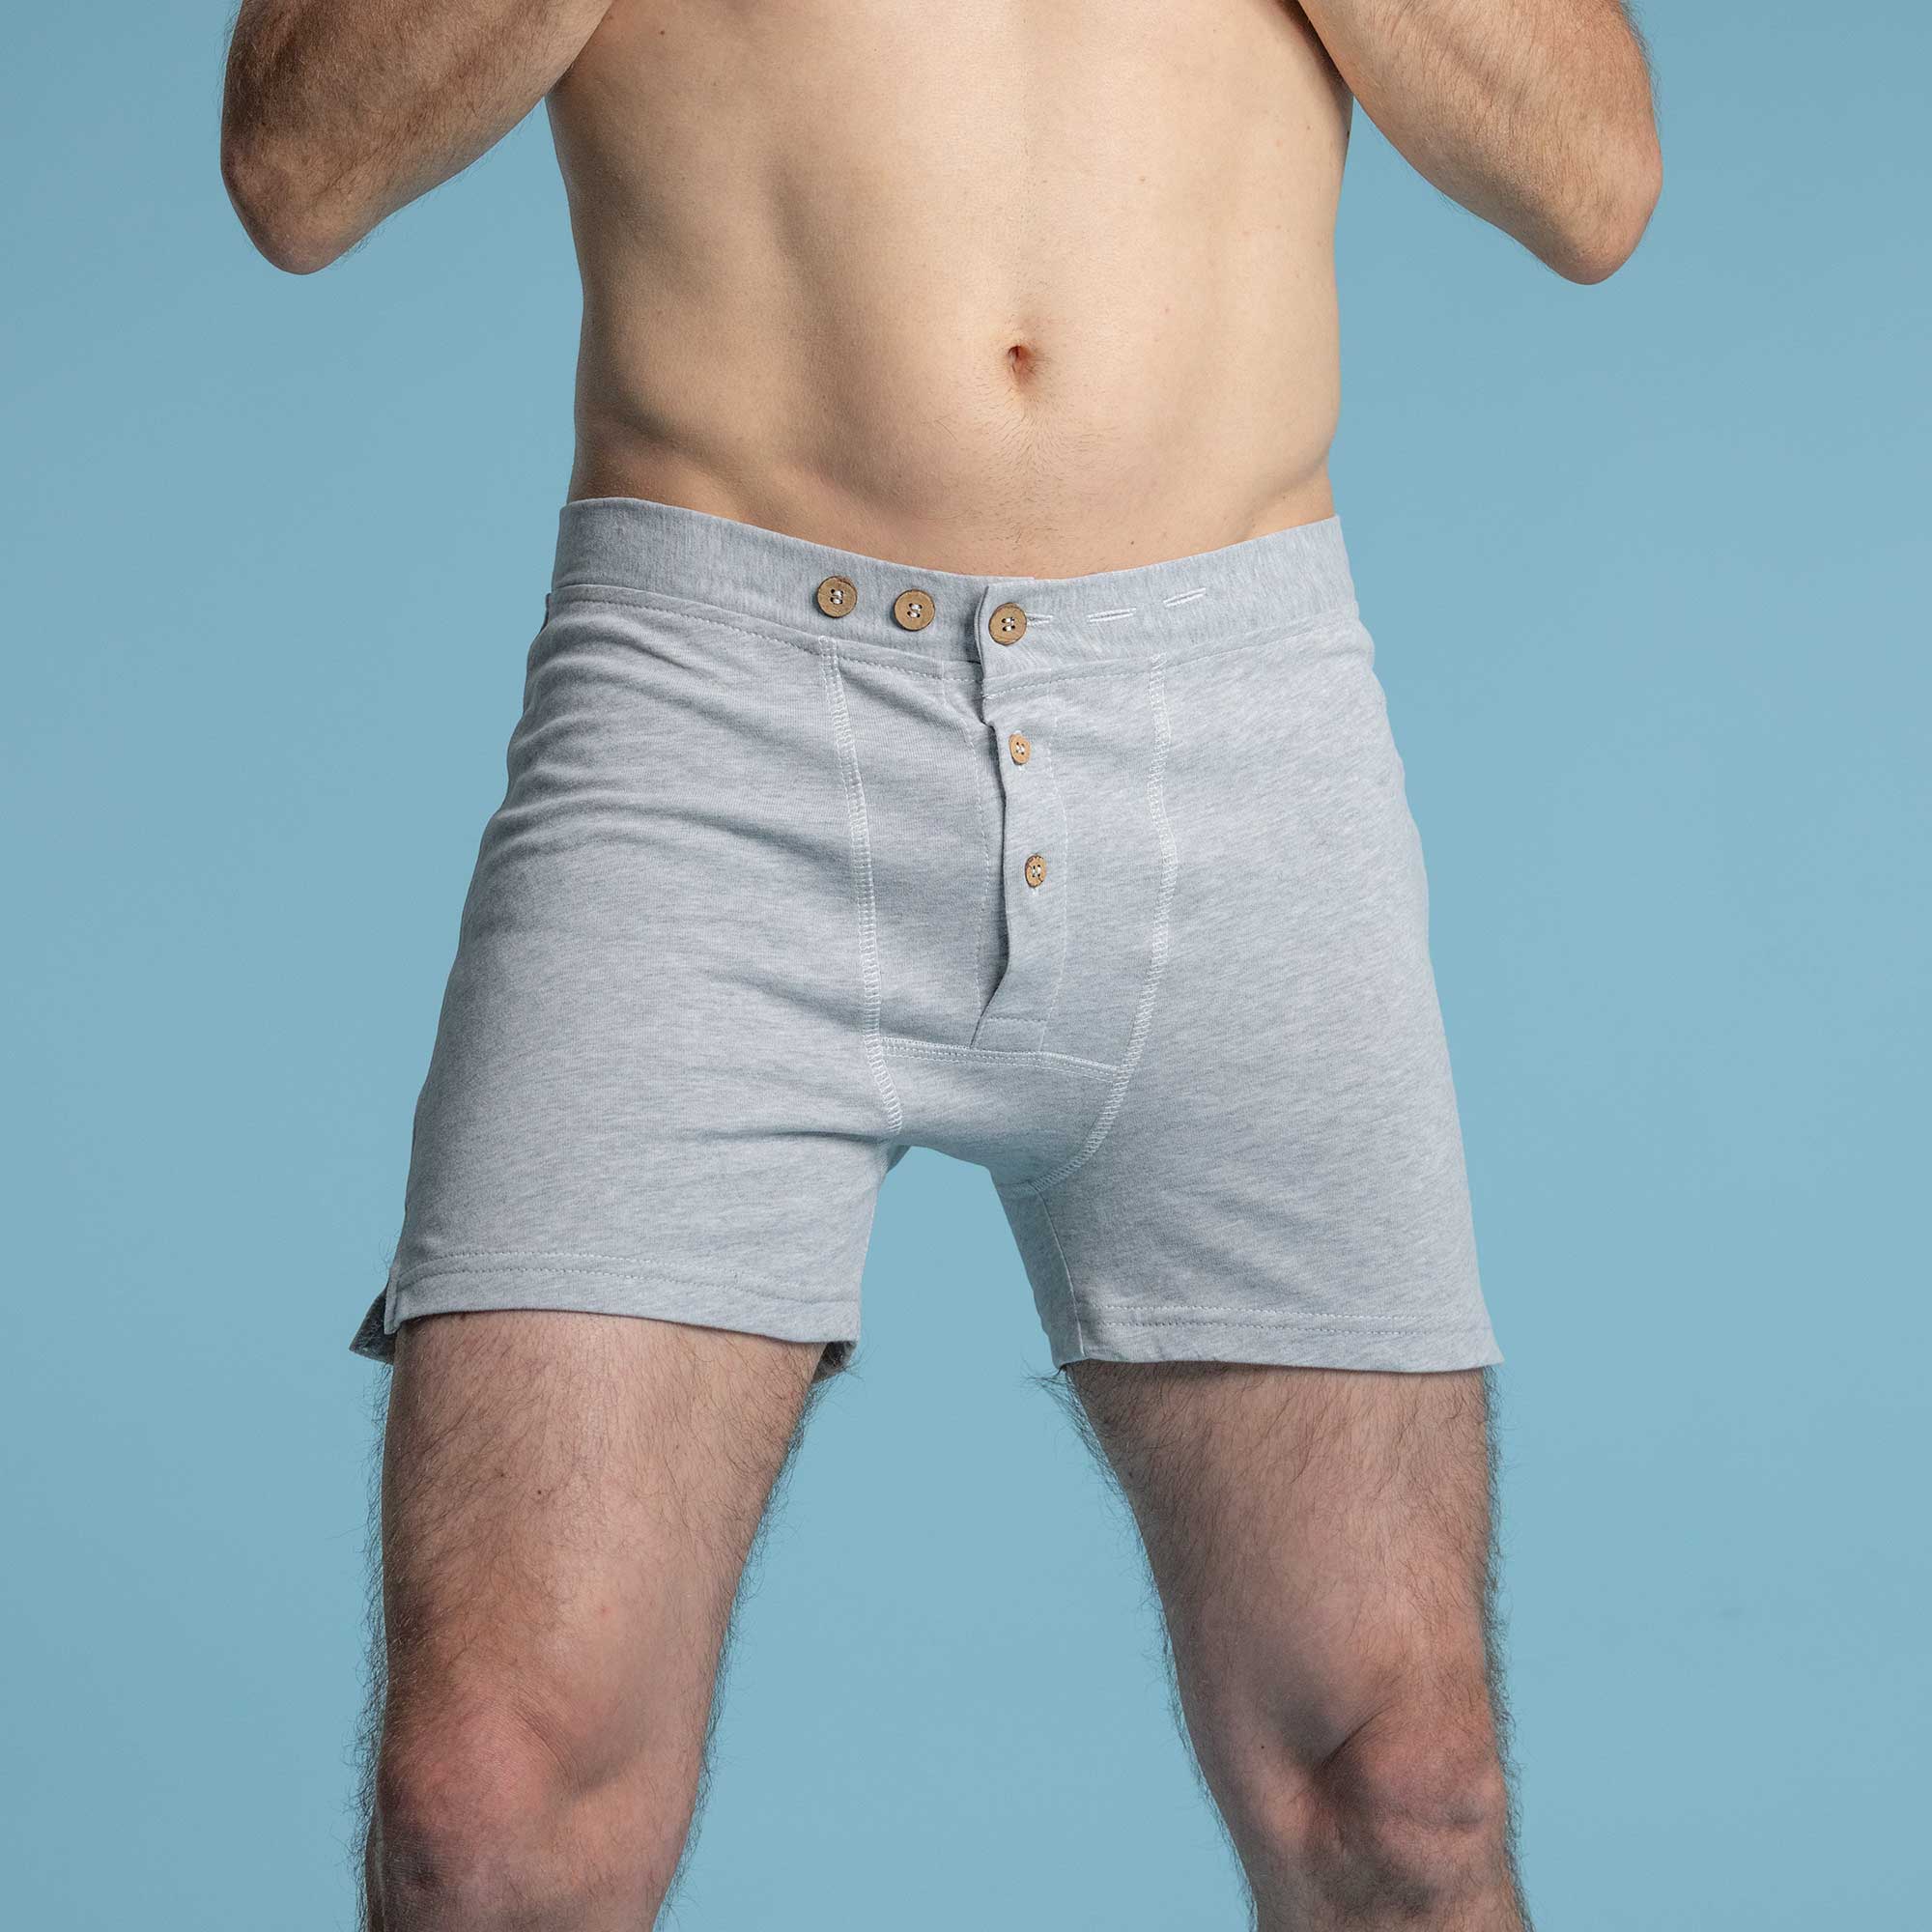 Gucci Beige Rib Underwear in Natural for Men